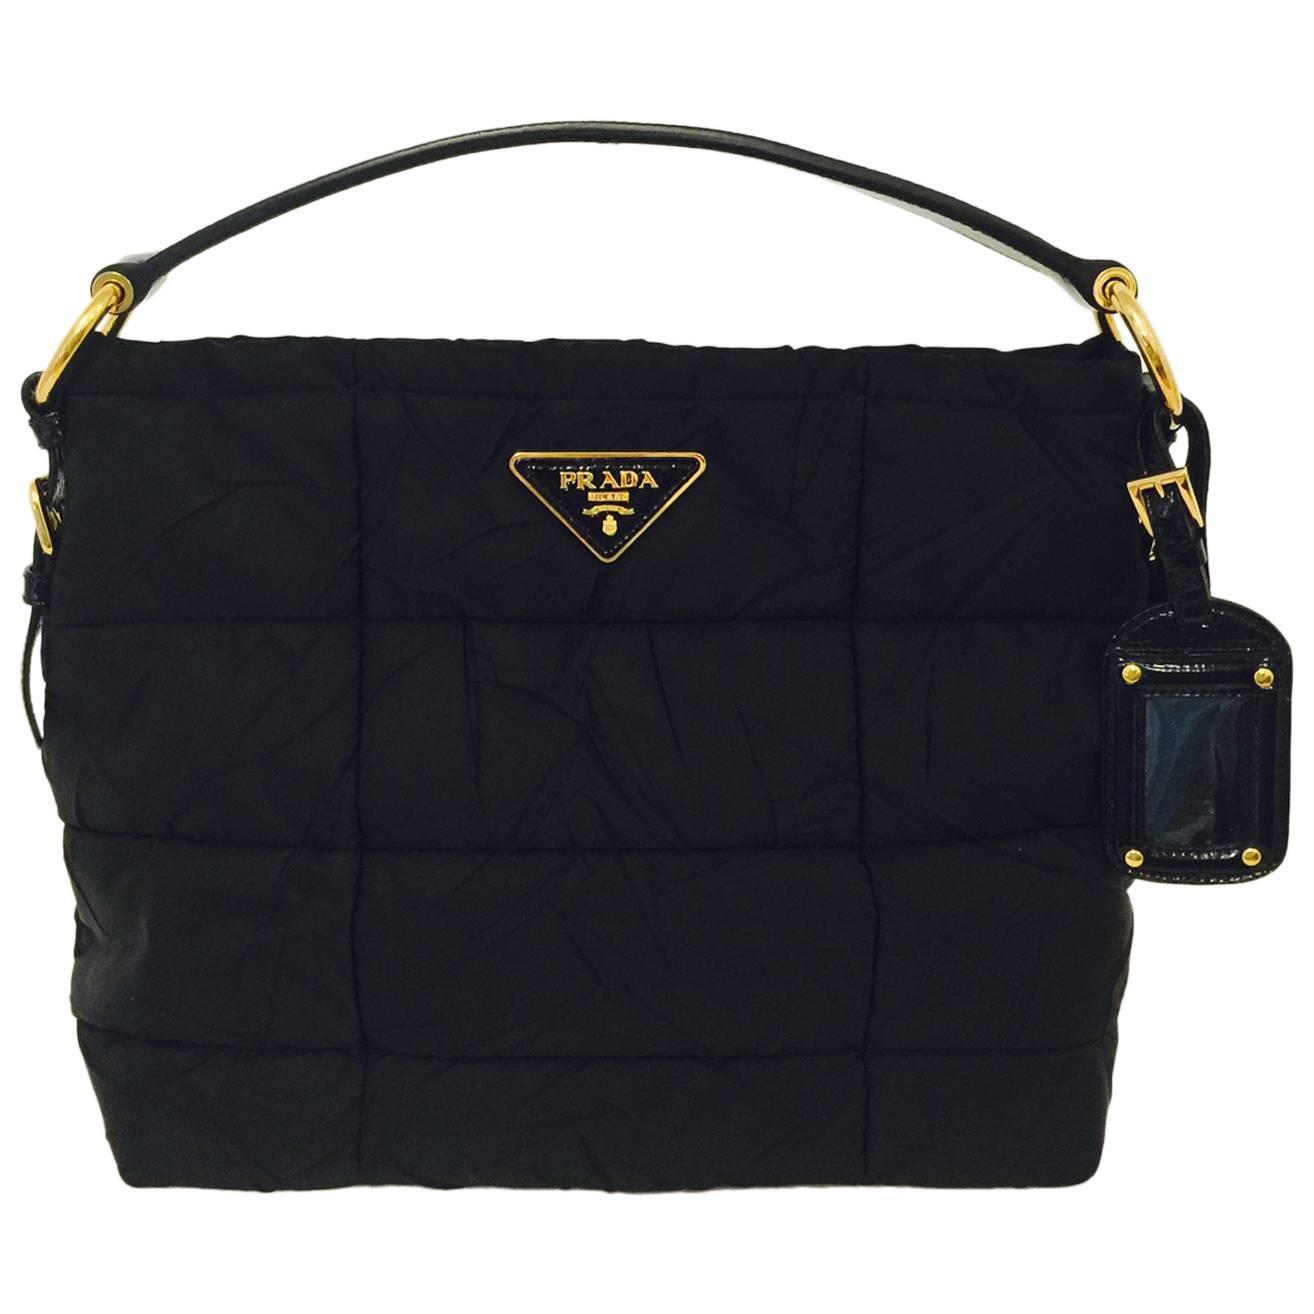 Vintage Prada Handbags and Purses - 108 For Sale at 1stdibs